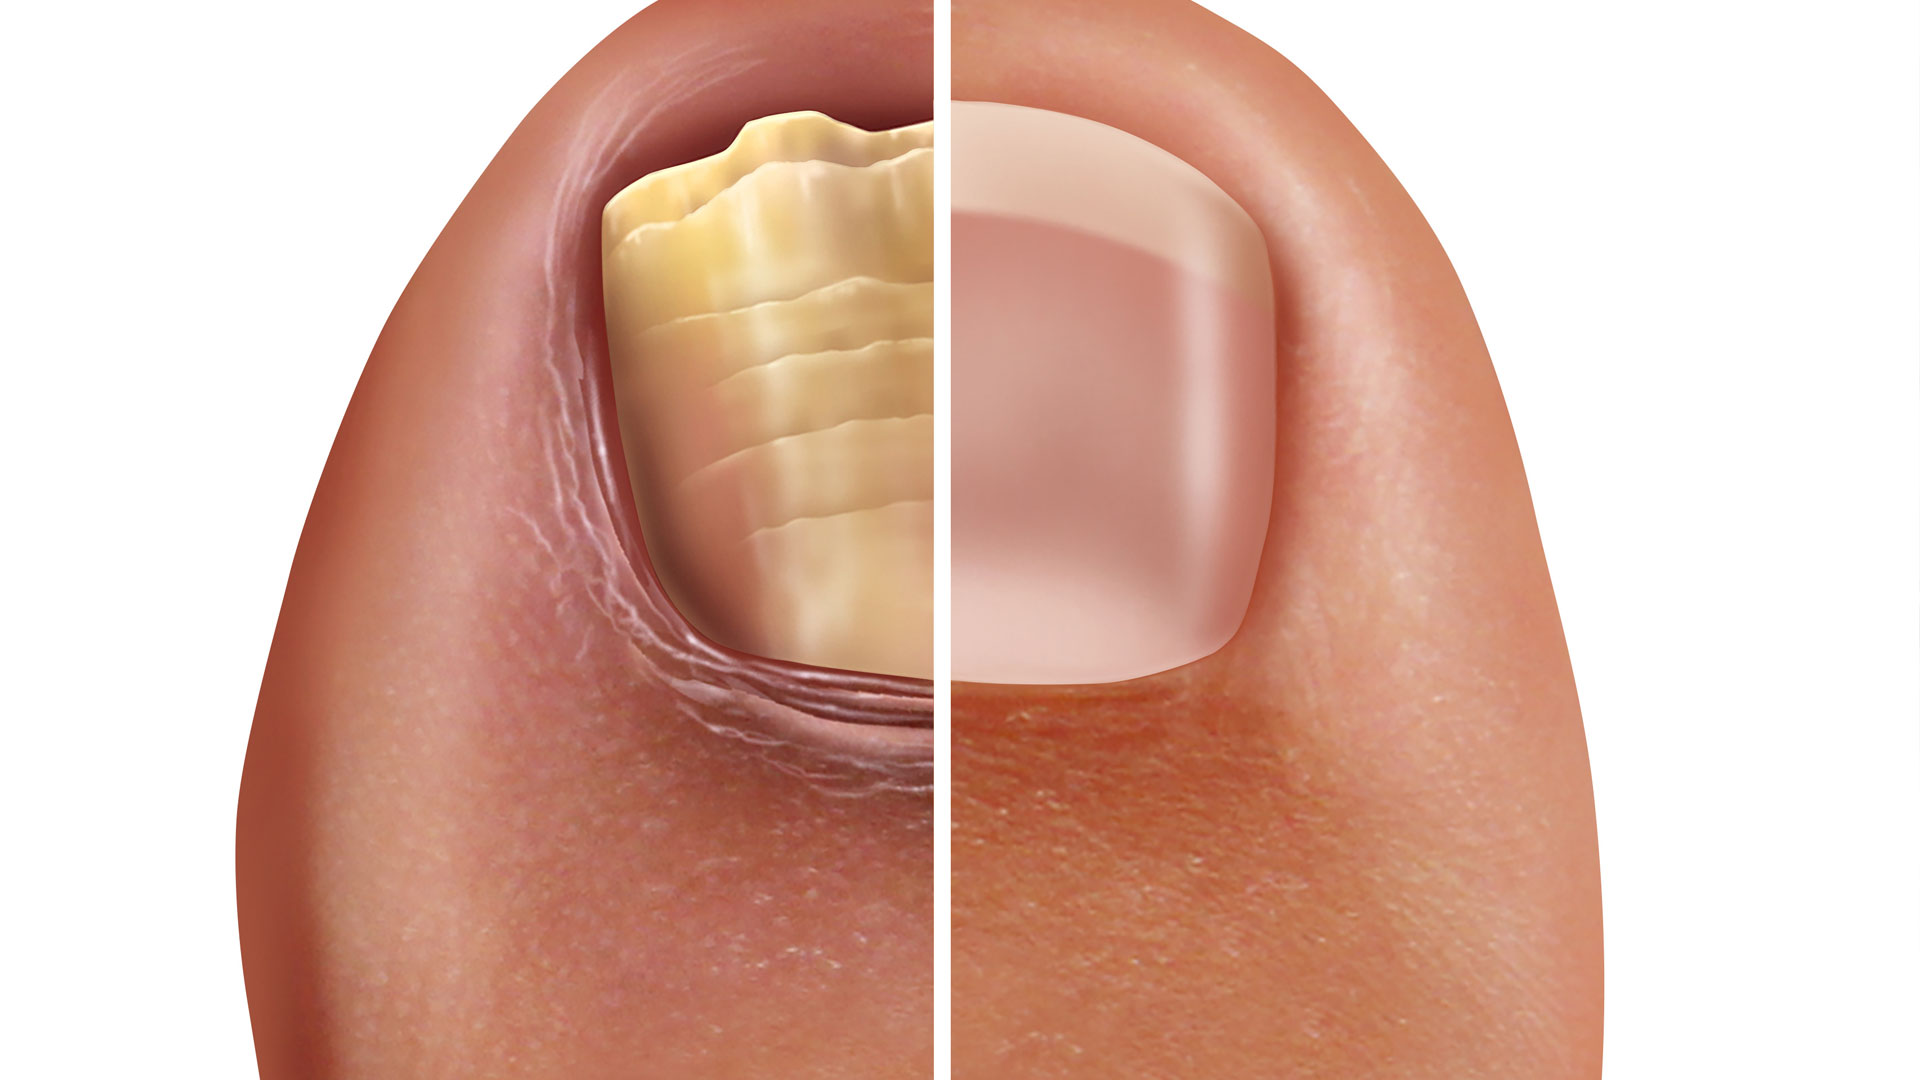 Ingrown toenail? How to snip it the right way | Fox News